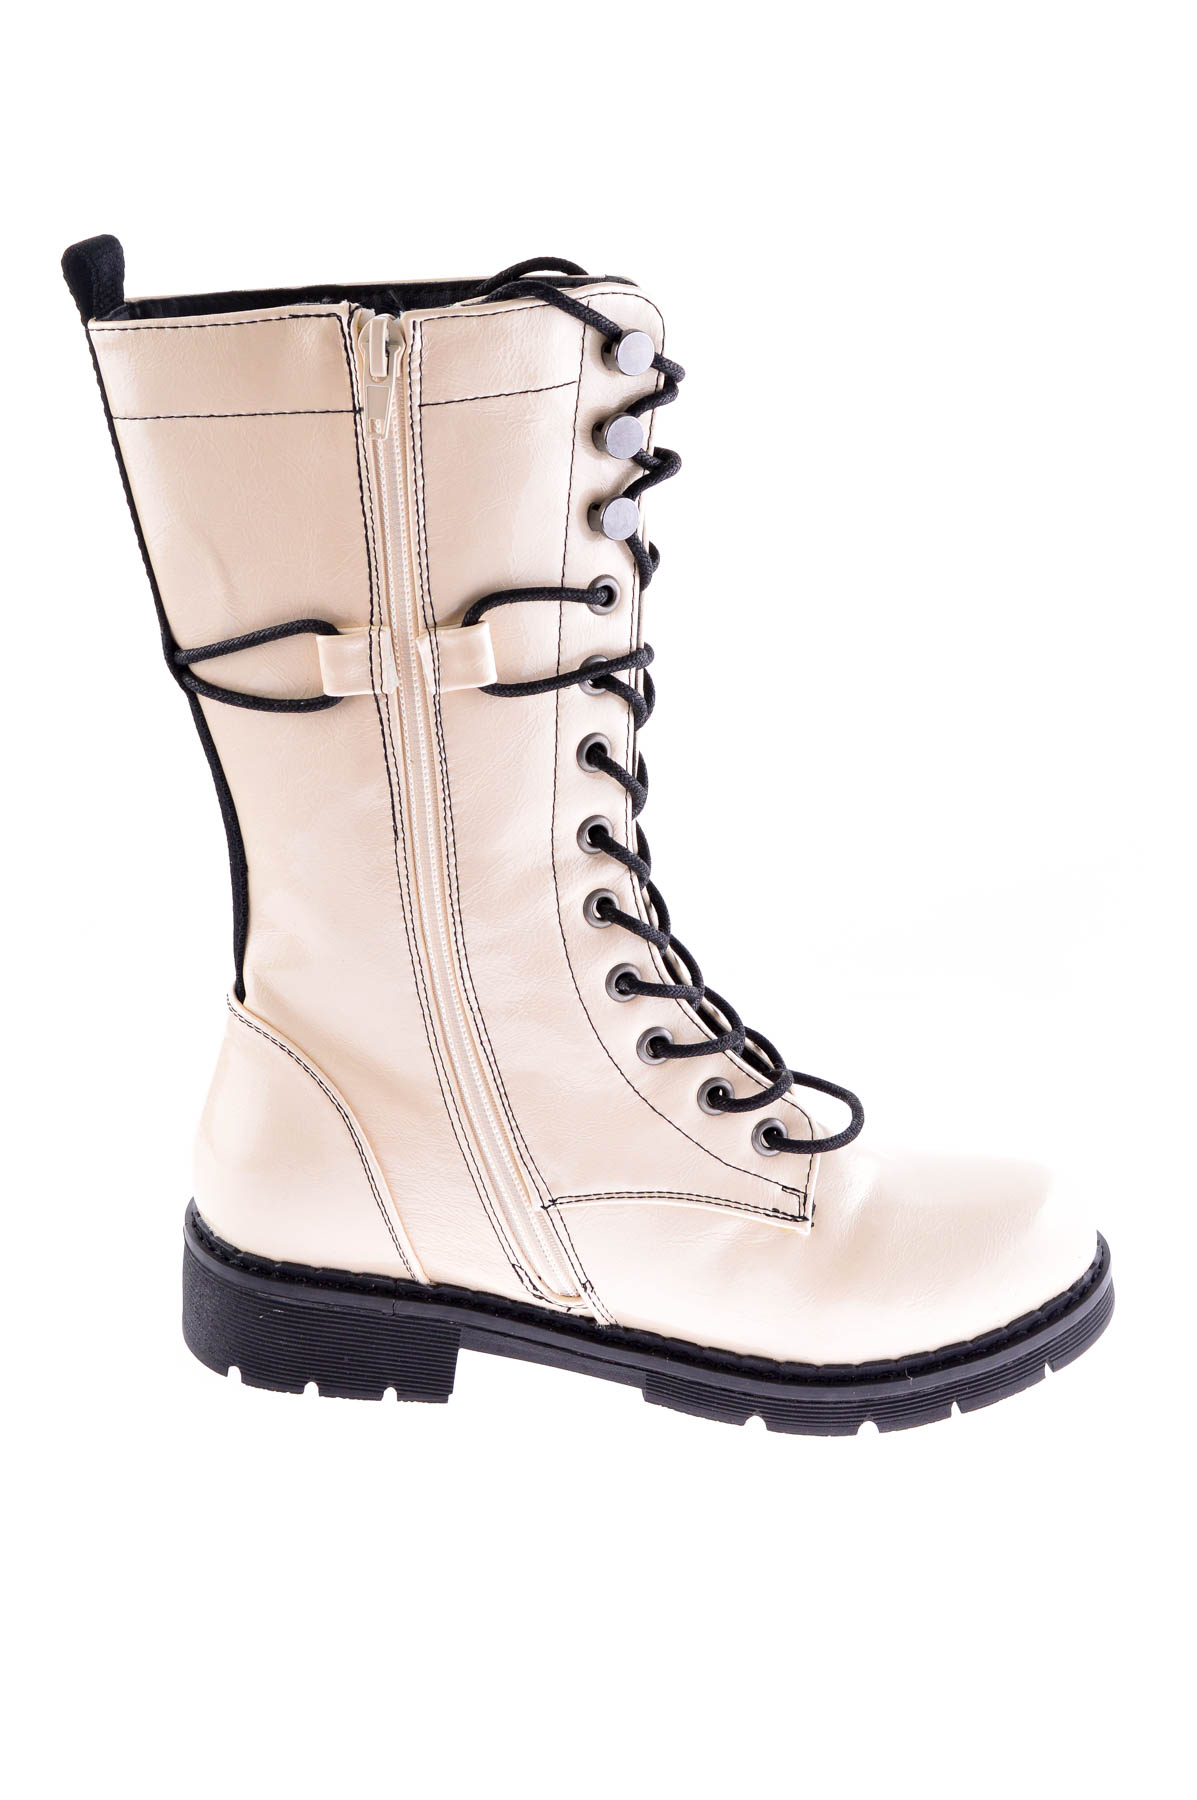 Women's boots - Super Cracks - 2